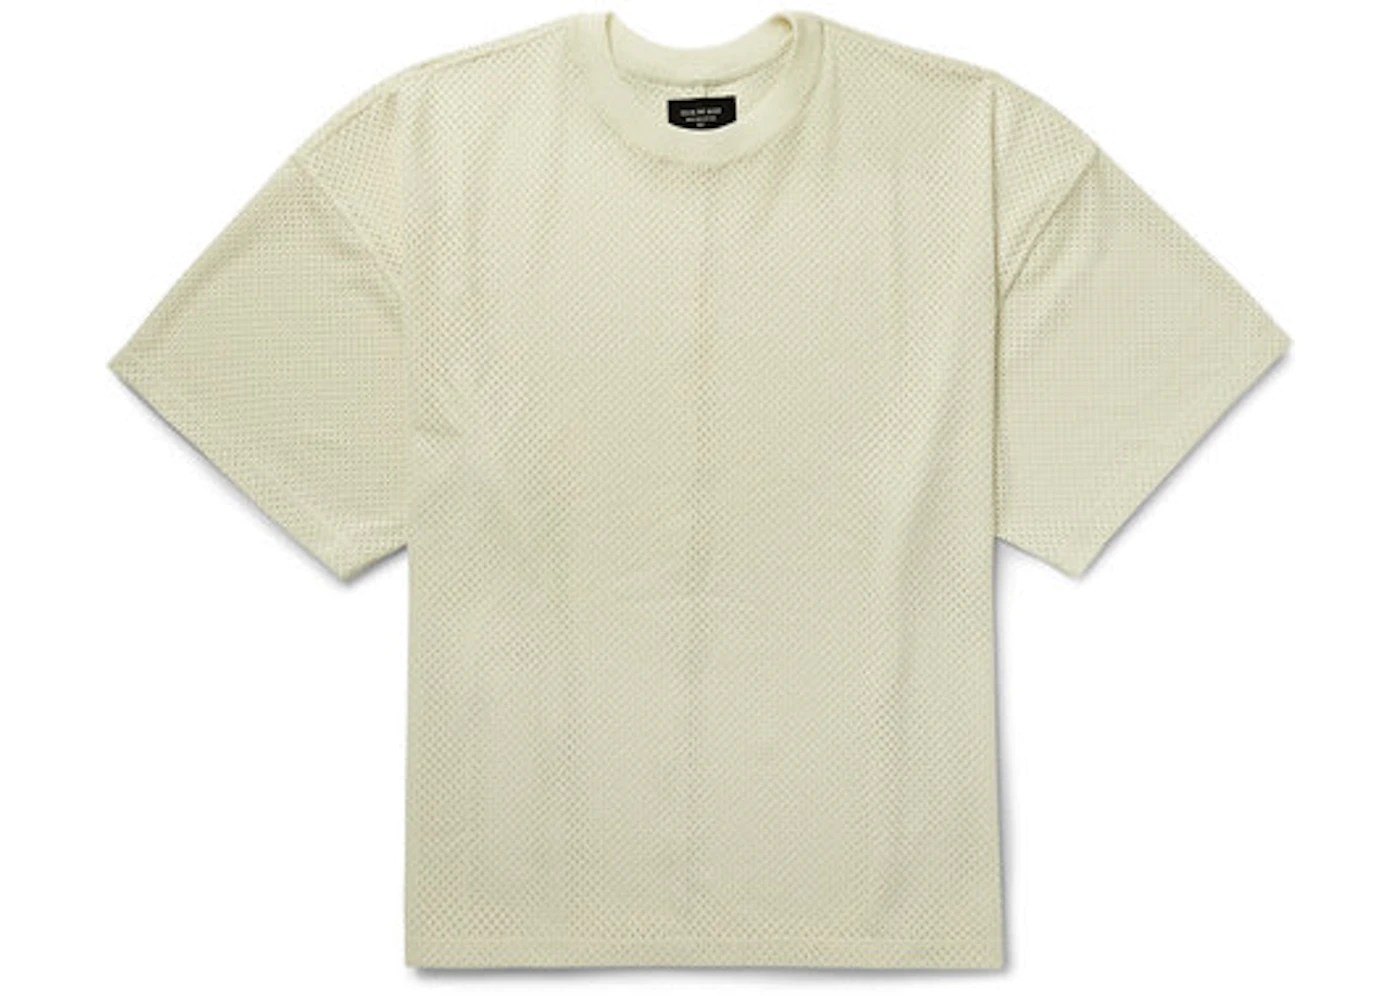 Denken Handelsmerk opblijven FEAR OF GOD Mesh Oversized T-shirt Cream - Fifth Collection - US